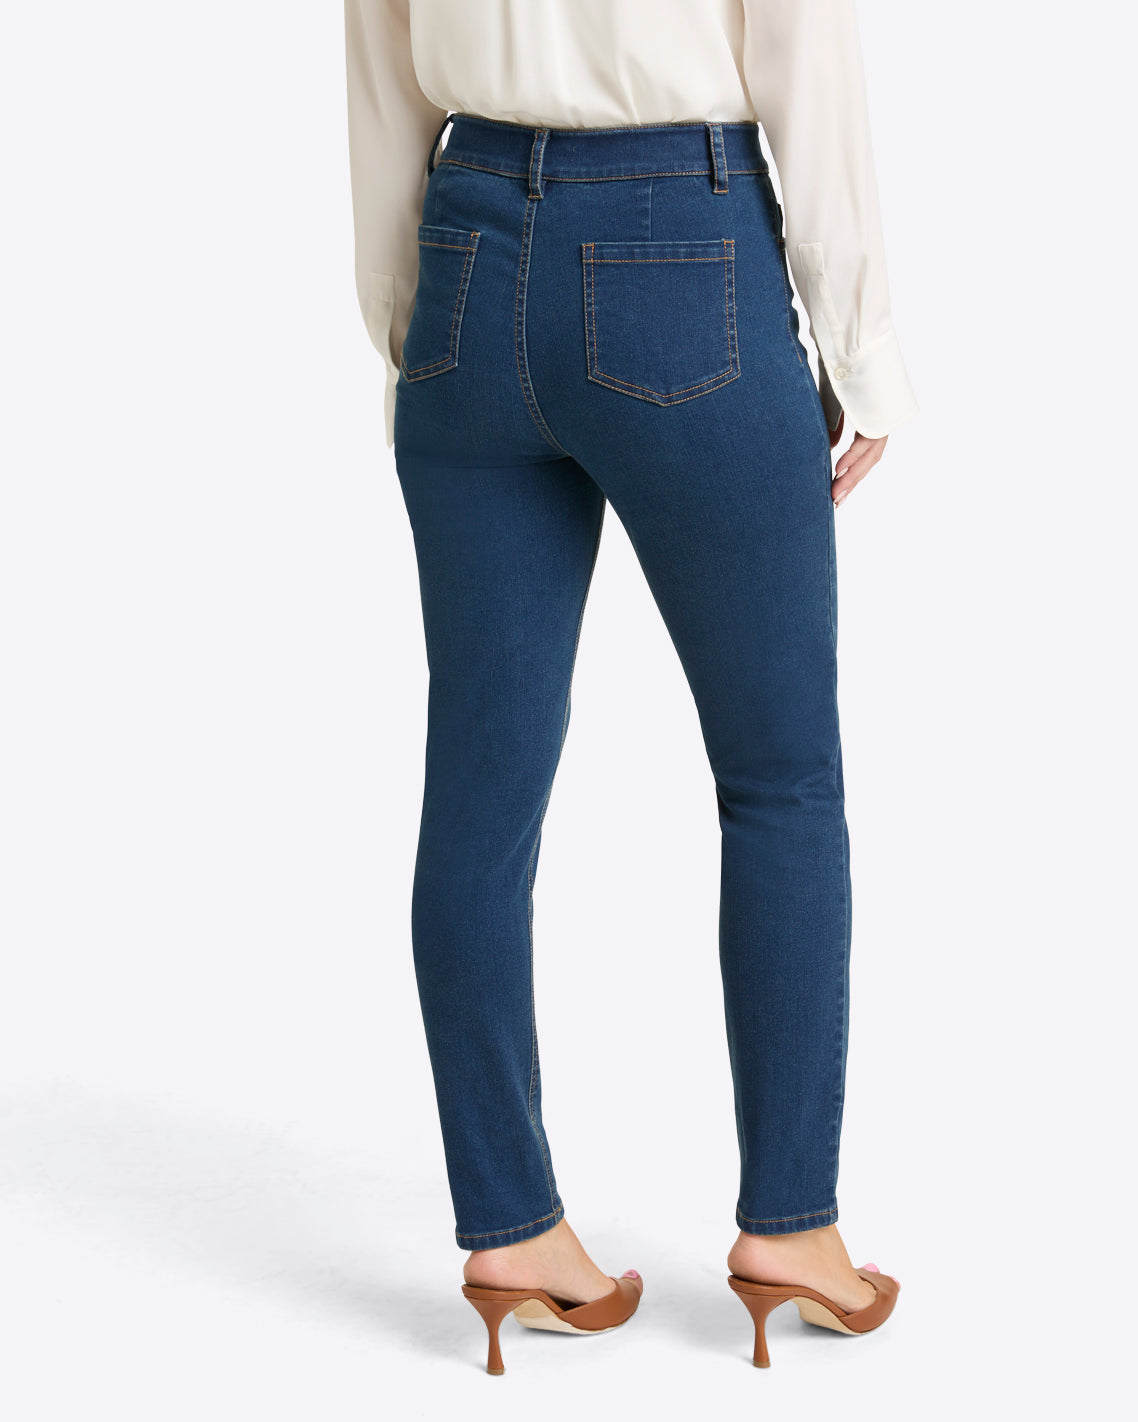 Slim Jeans, Shop for Women's Jeans